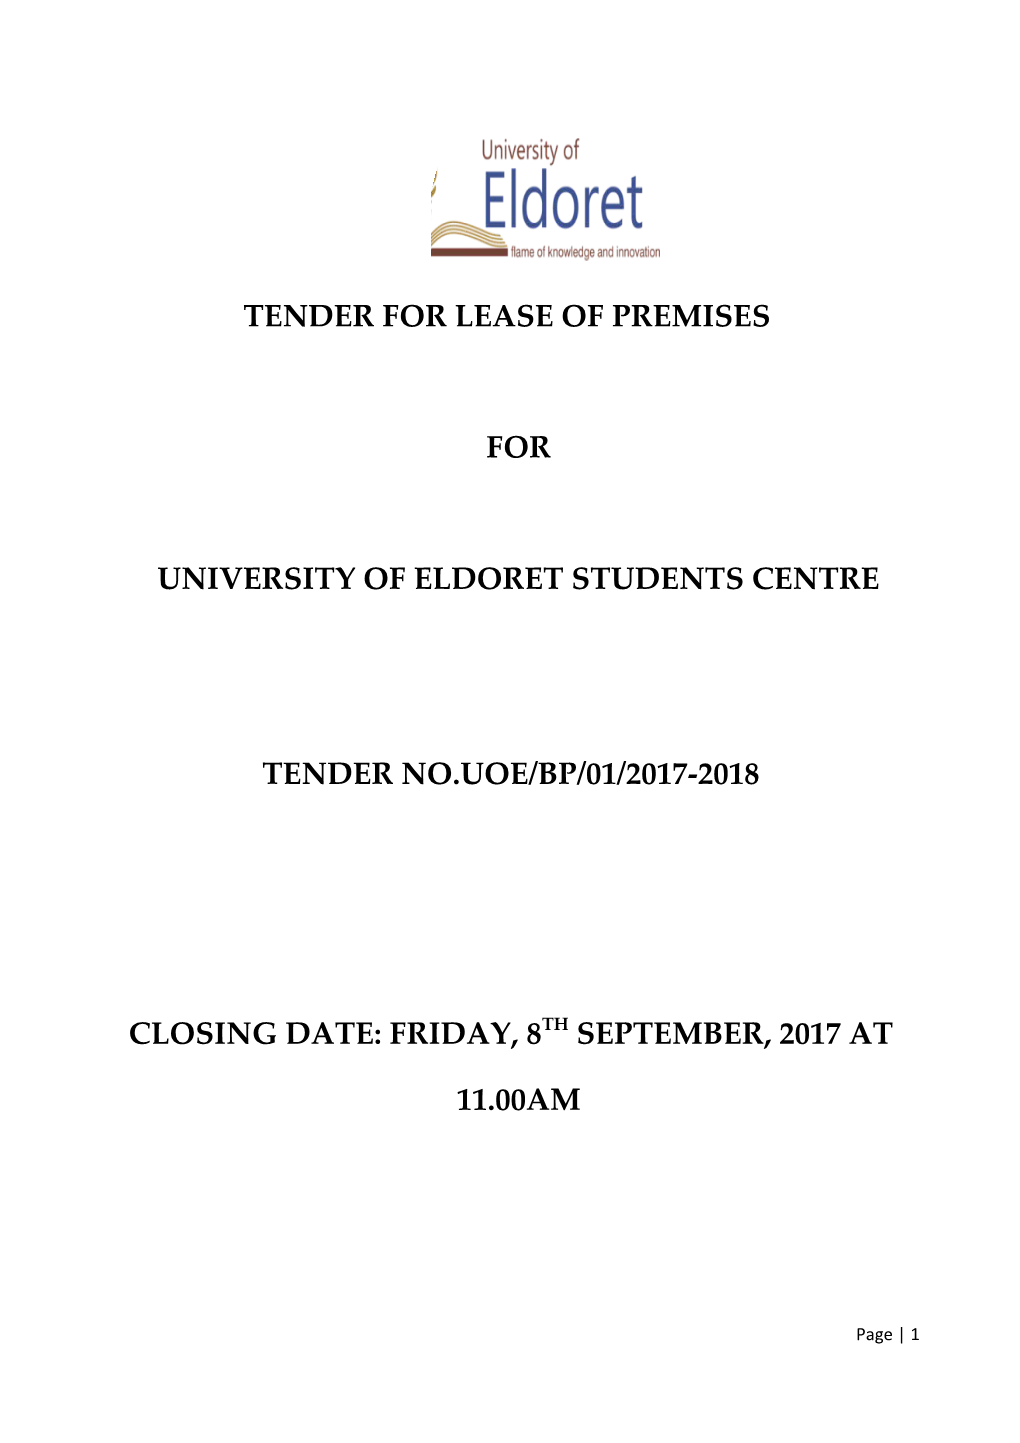 University of Eldoret Students Centre